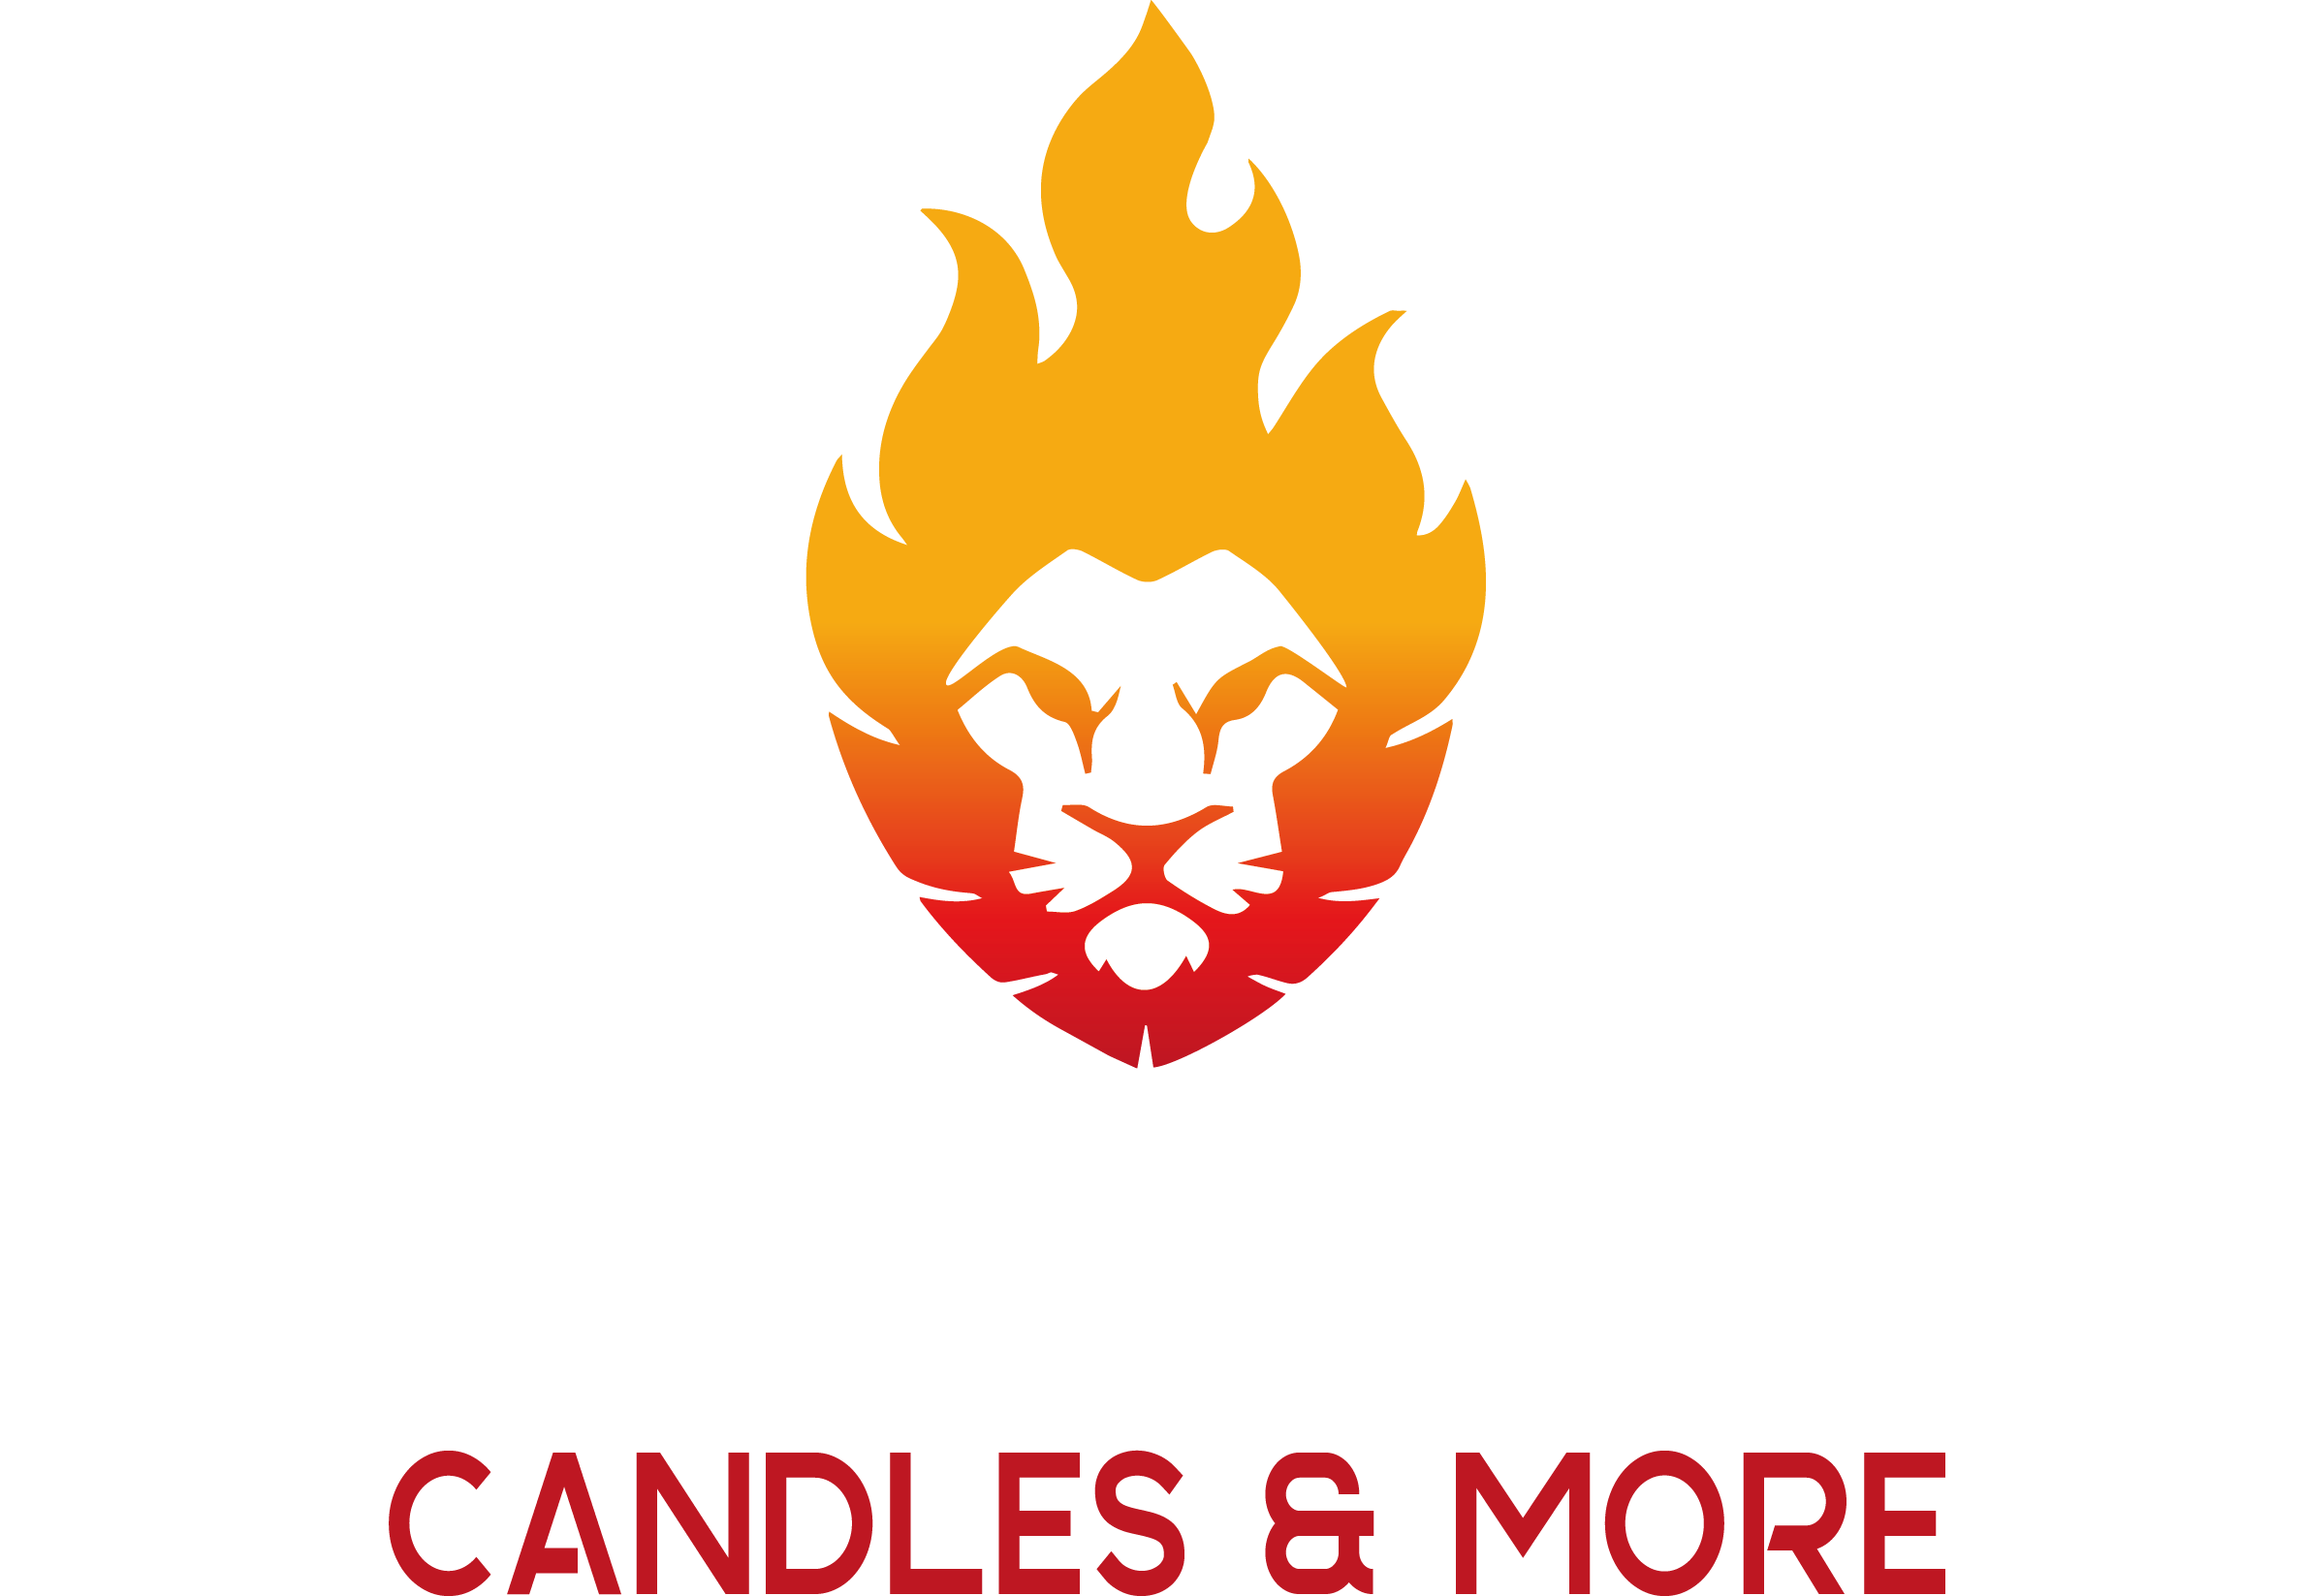 Esteleo Candles & More